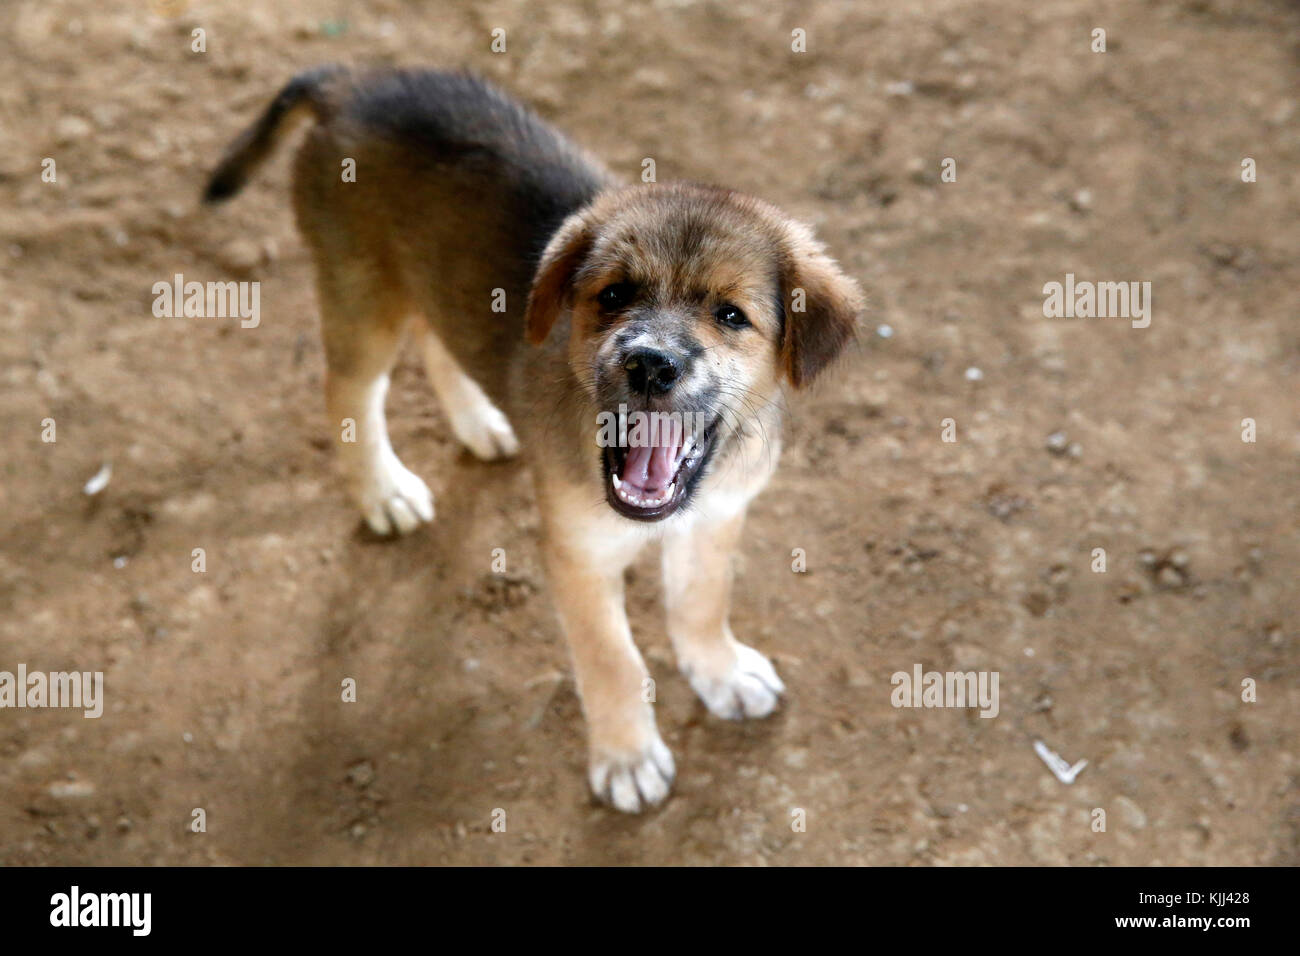 Barking Dog. Kambodscha. Stockfoto